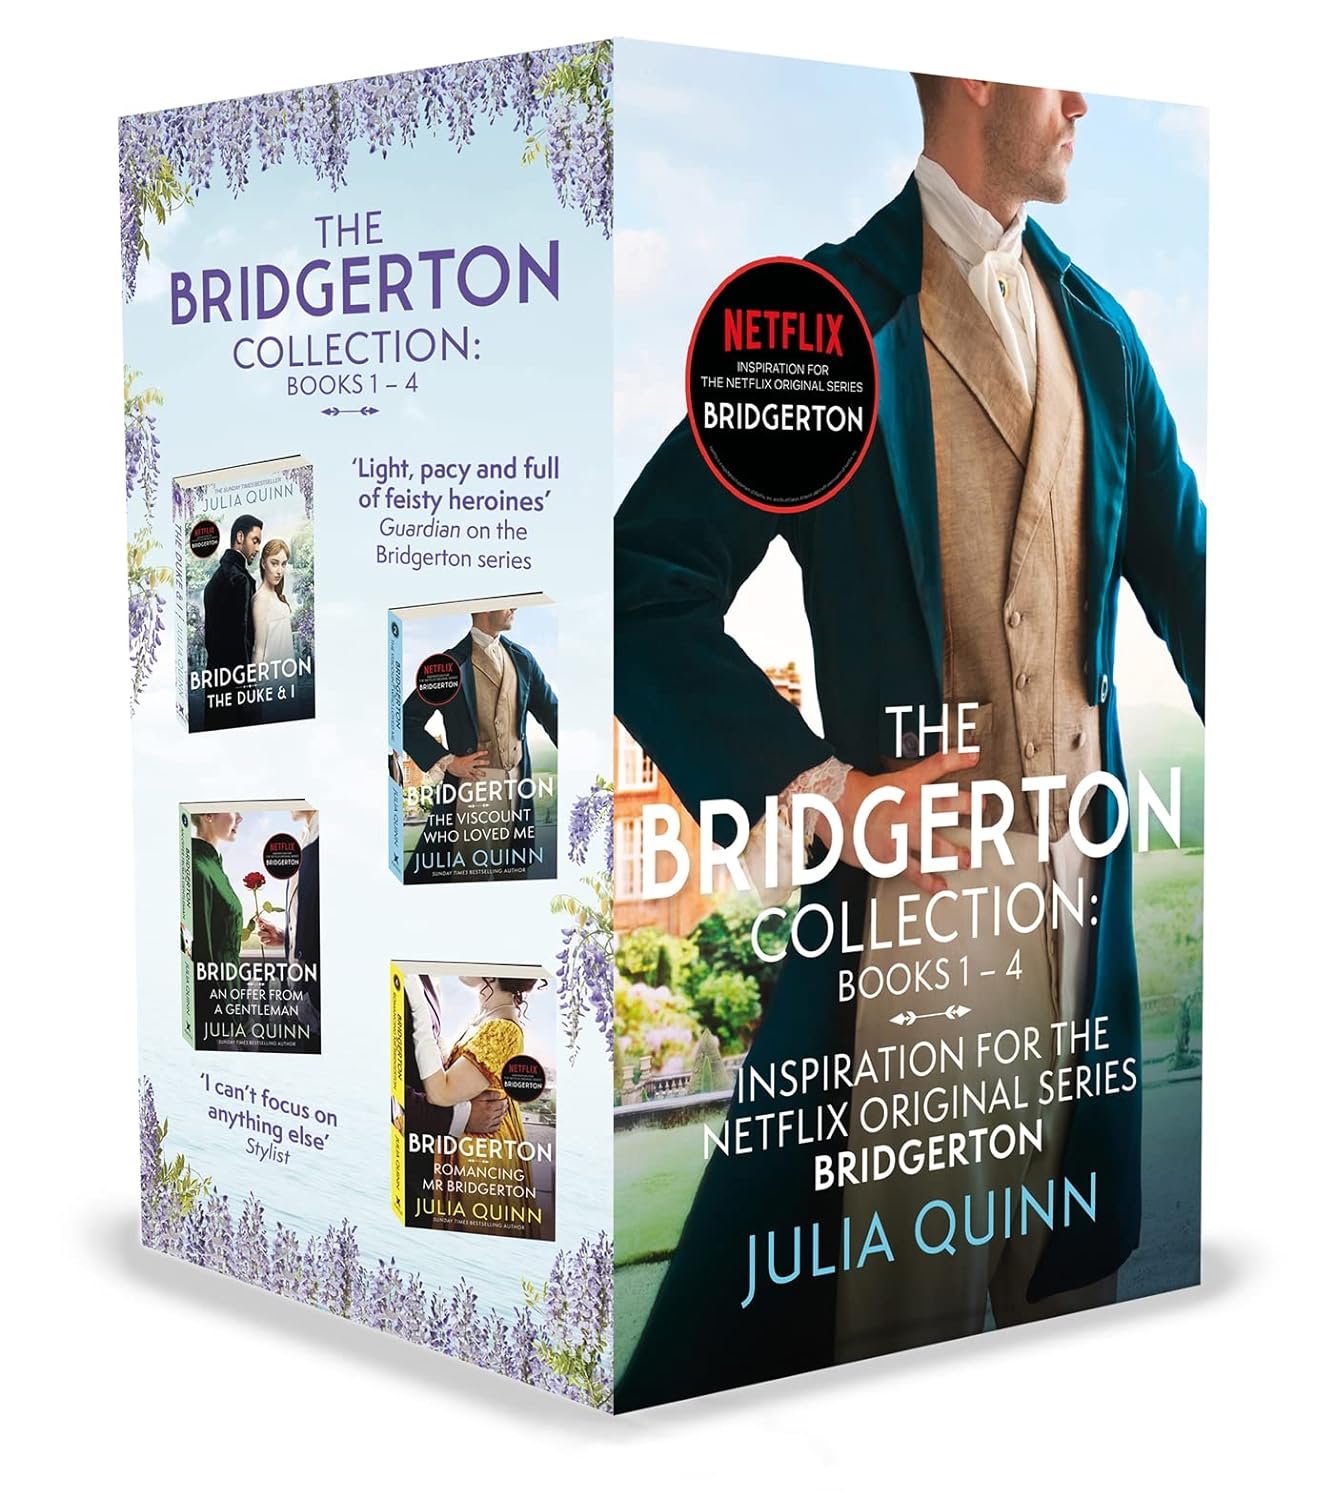 The Bridgerton Collection: Books 1 - 4 : Inspiration for the Netflix Original Series Bridgerton